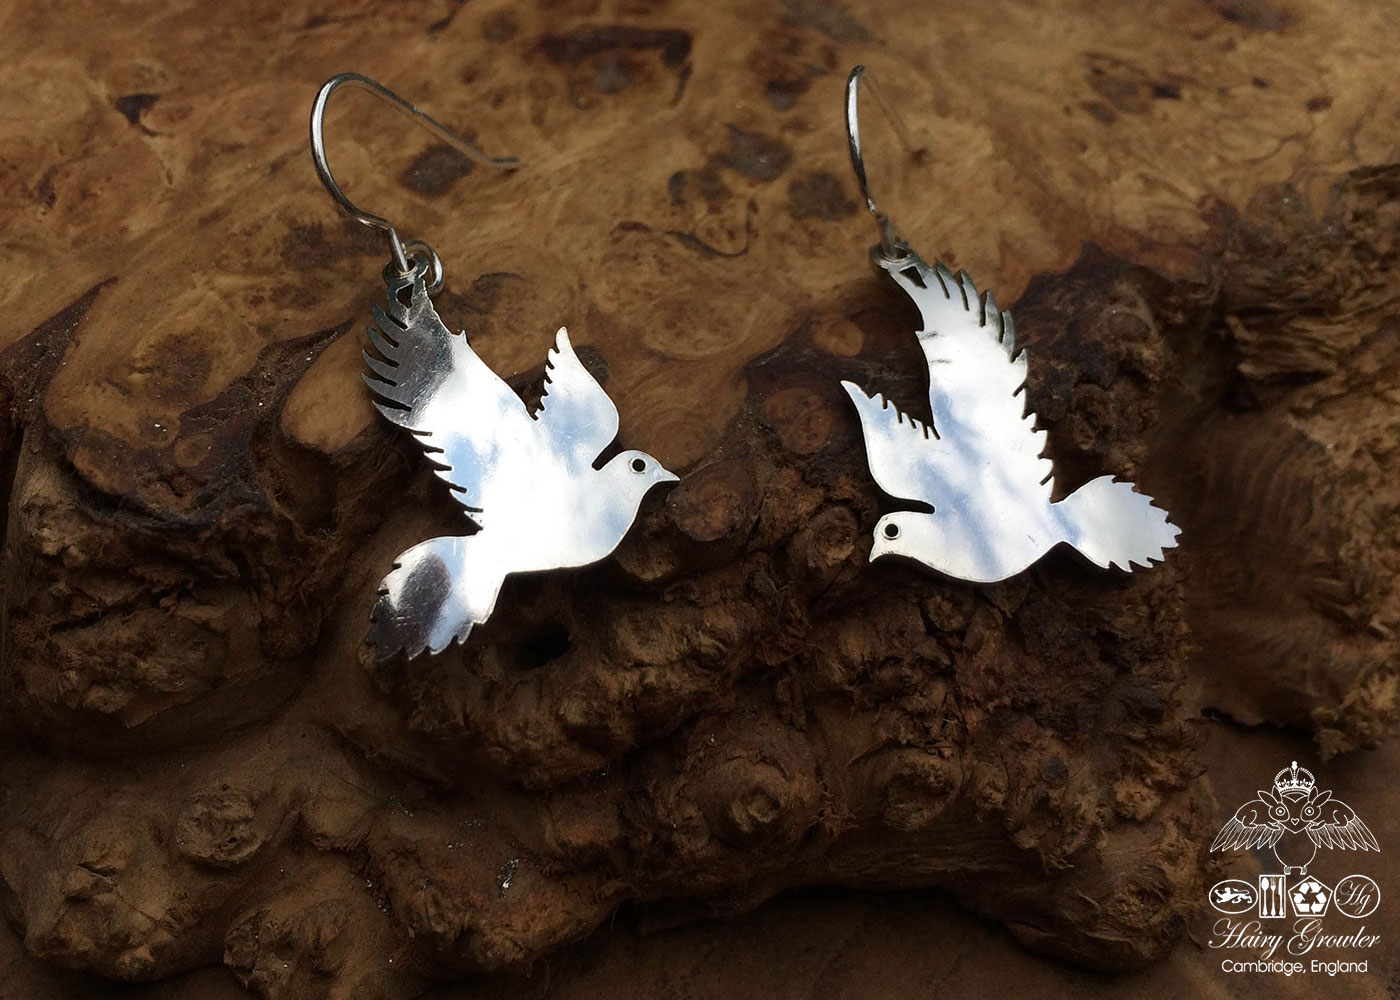 free as a bird recycled spoon earrings Hairy Growler workshop